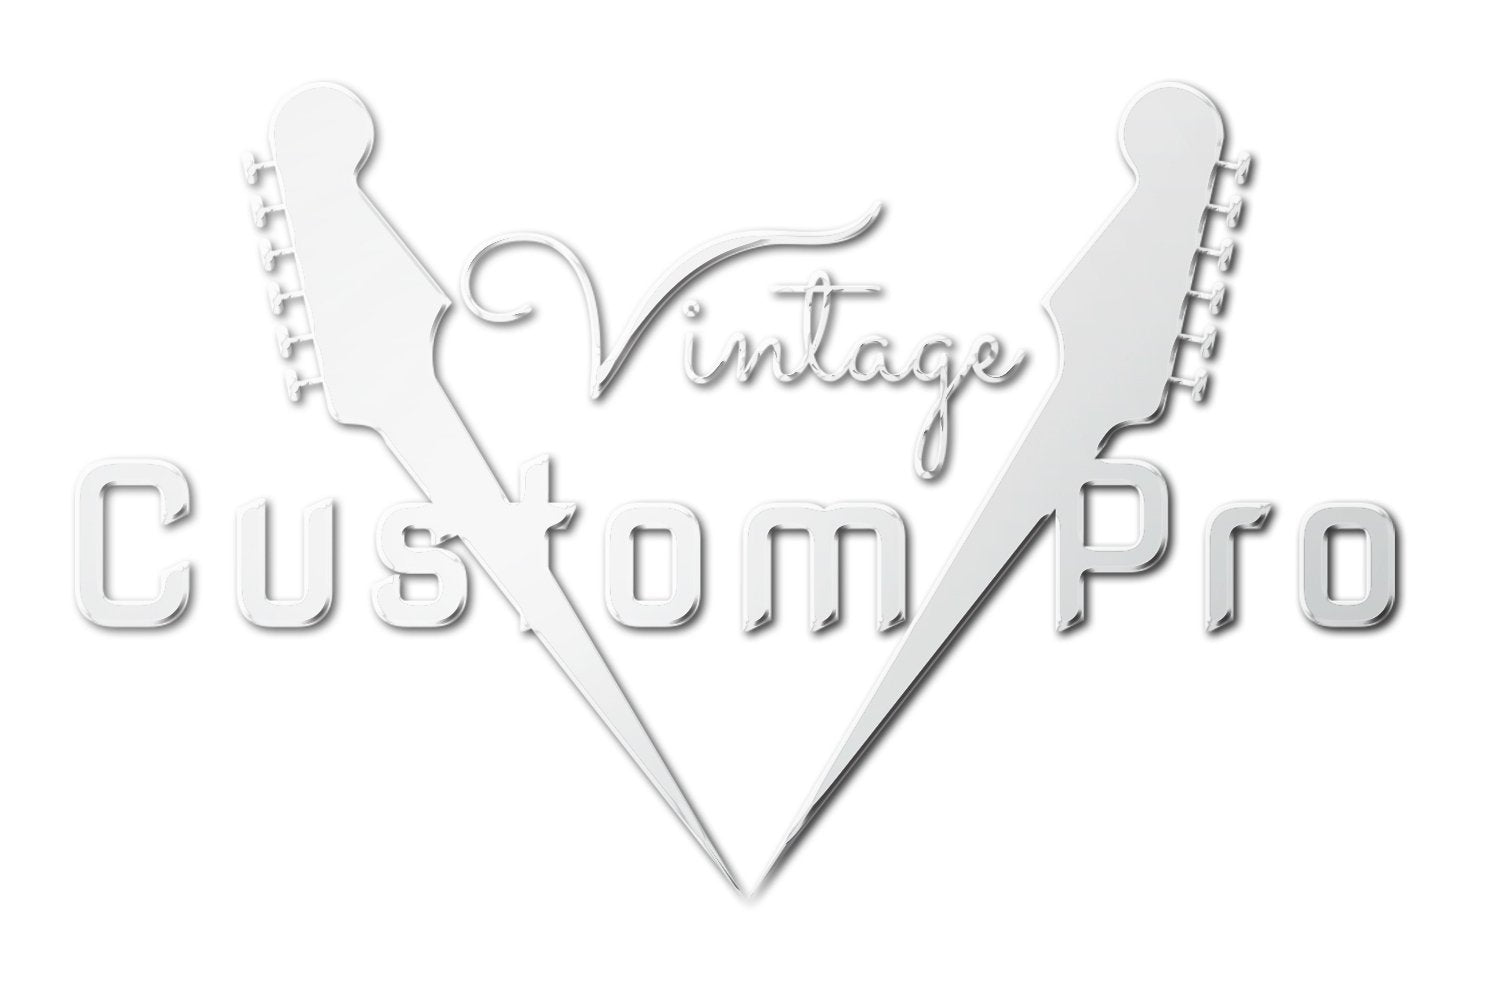 Vintage* V100AW Electric Guitar, Electric Guitar for sale at Richards Guitars.